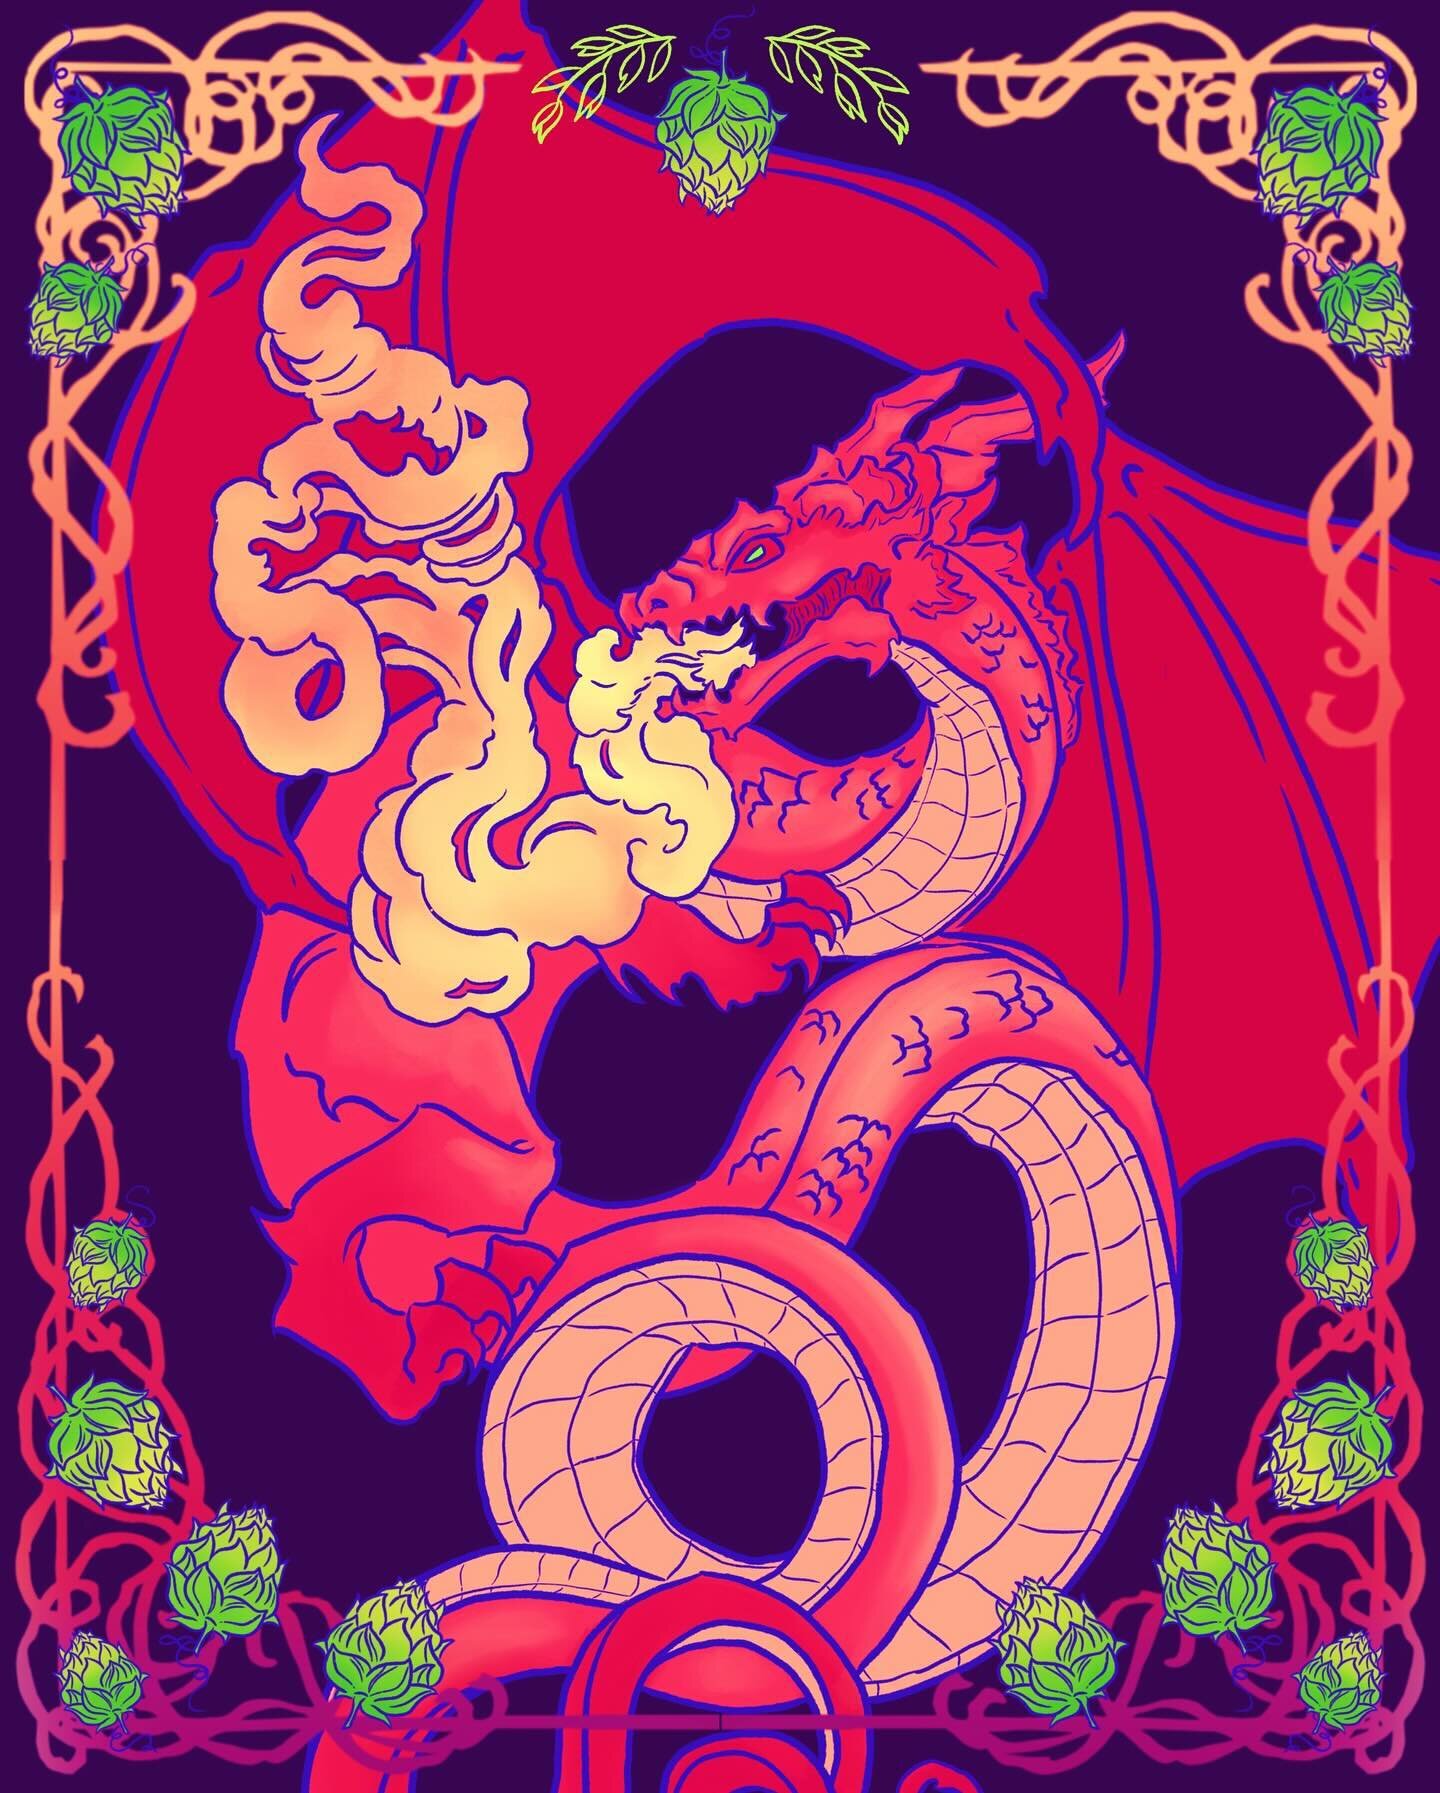 Another bit of dragon post for the upcoming Year of the Dragon! 
-
-
-
#dragonart #yearofthedragon #dragon #fantasyart #nerdart #graphicart #illustrationart #olympiaartist